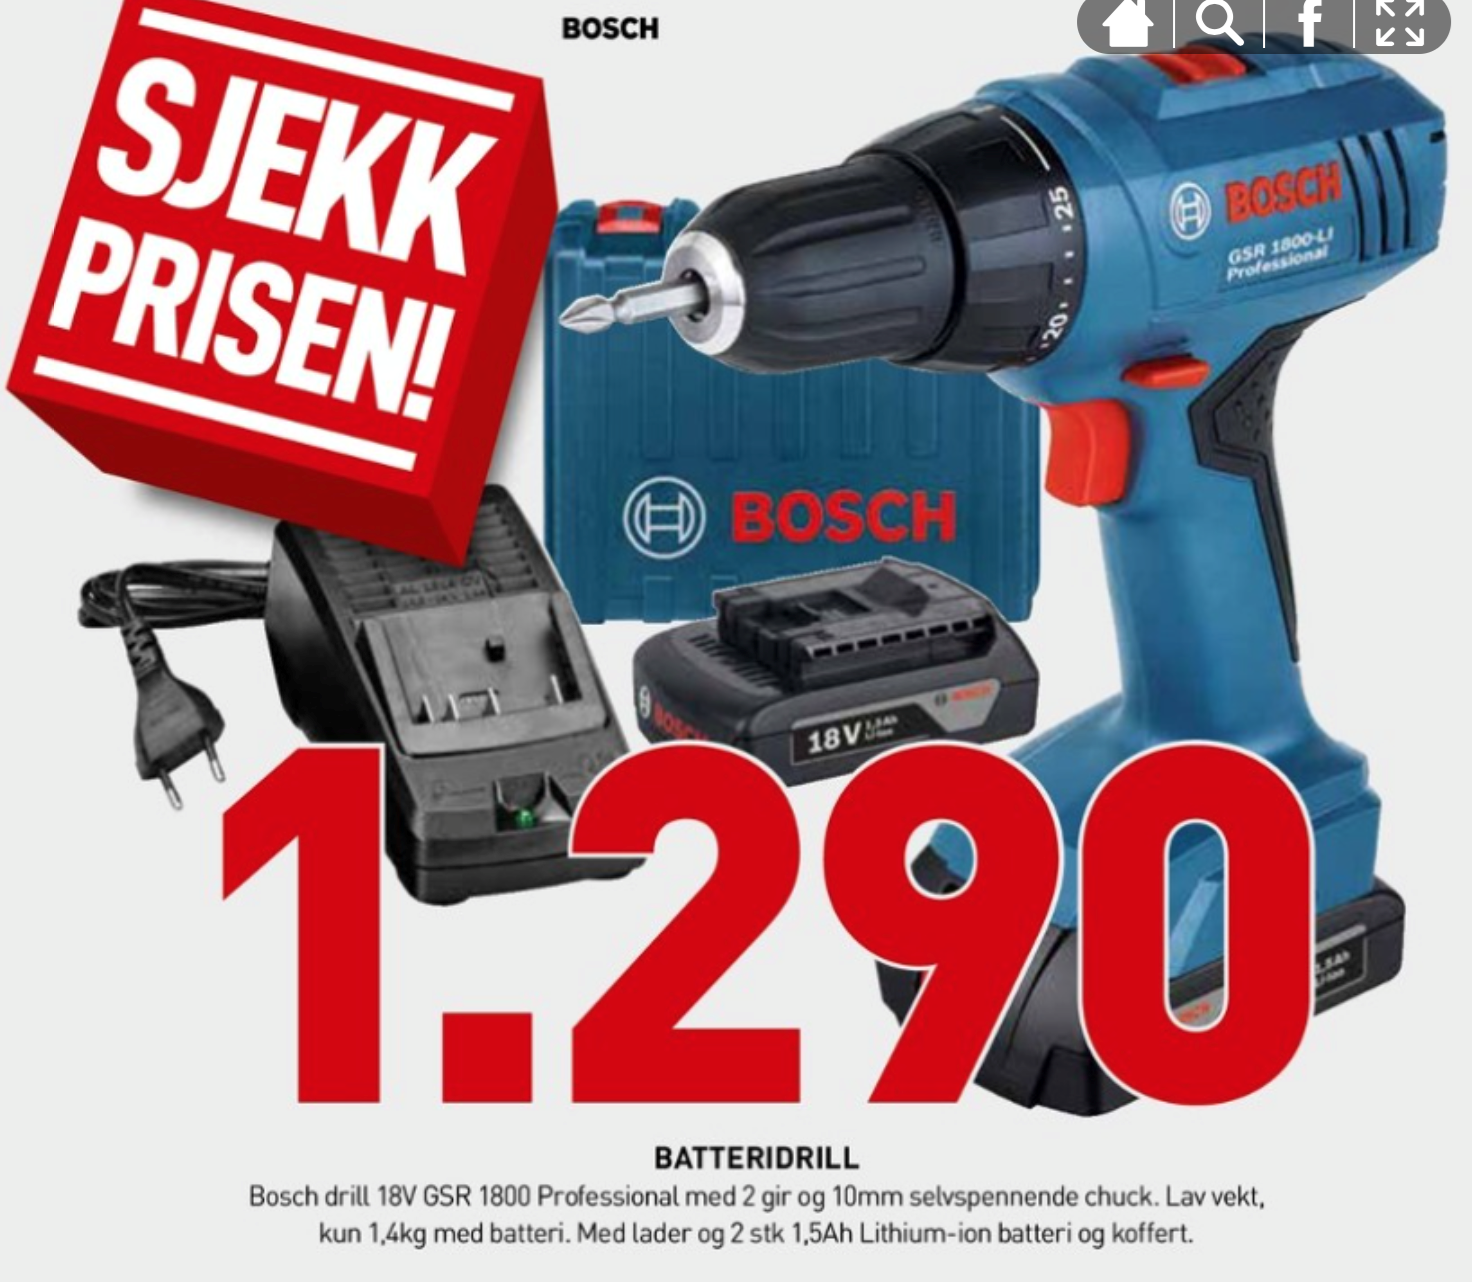 Bosch 18v gsr1800 - drill.png - Everlost